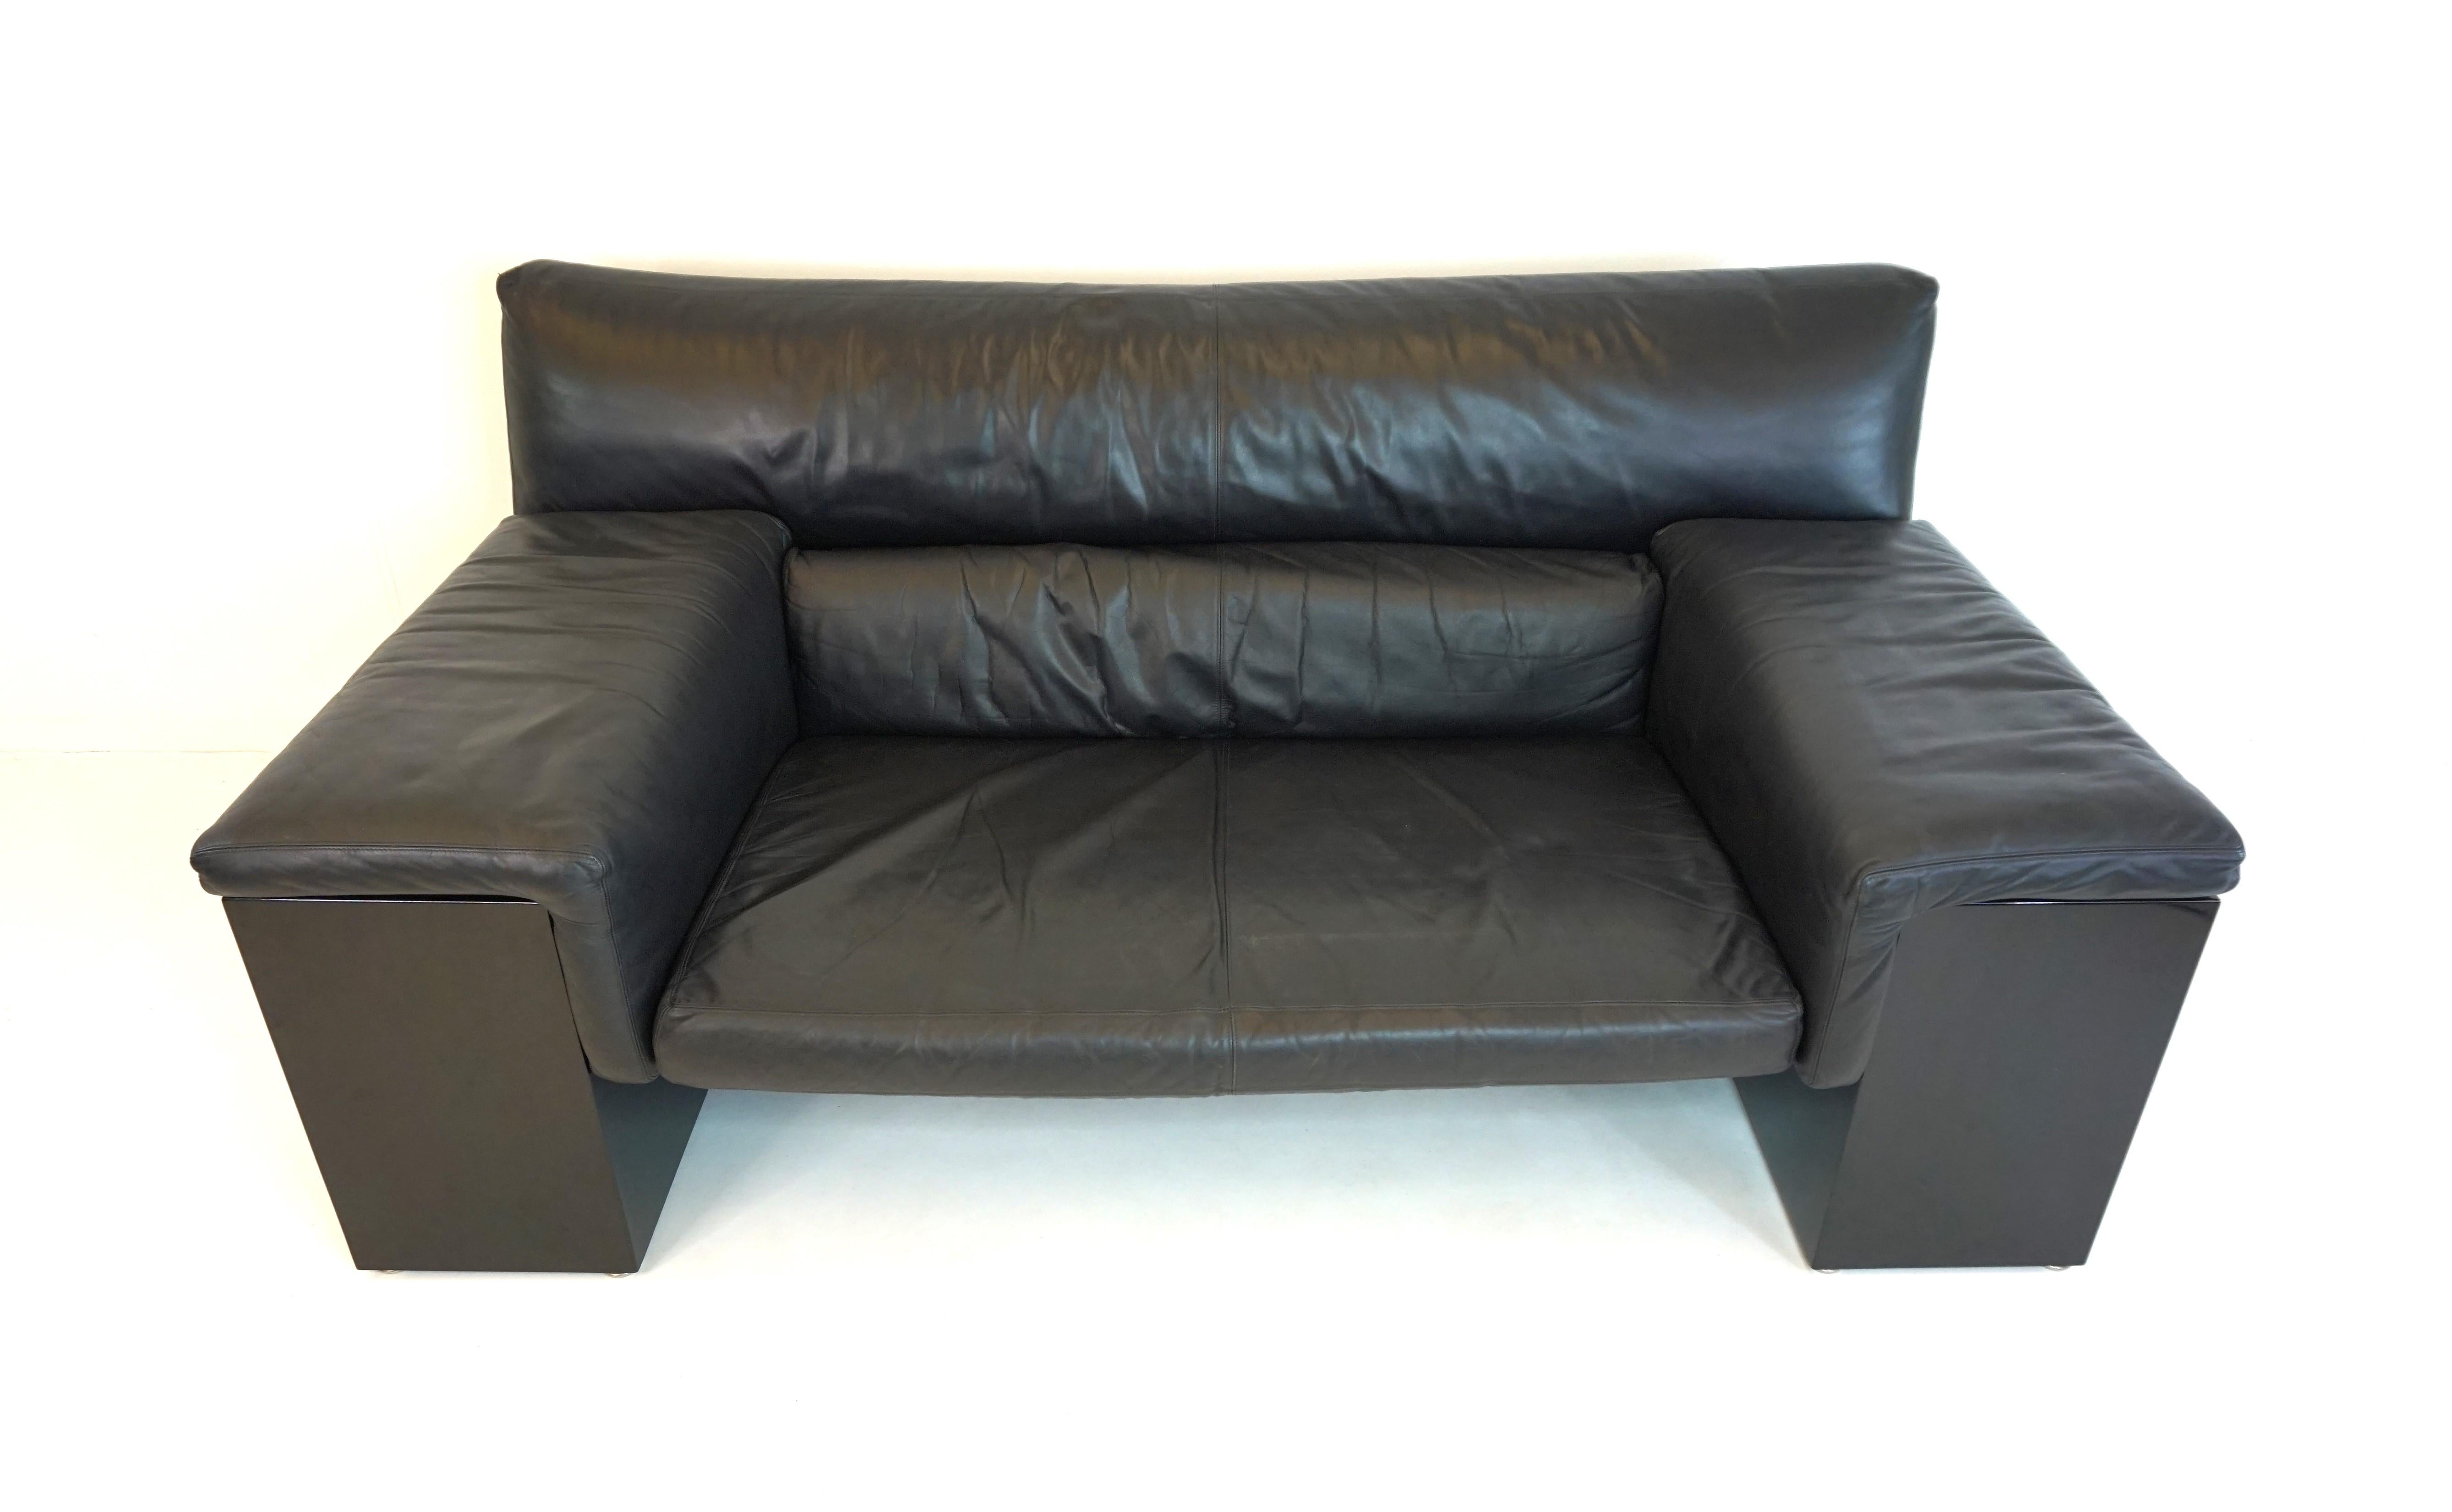 German Knoll Brigadier 2 seater leather sofa by Cini Boeri